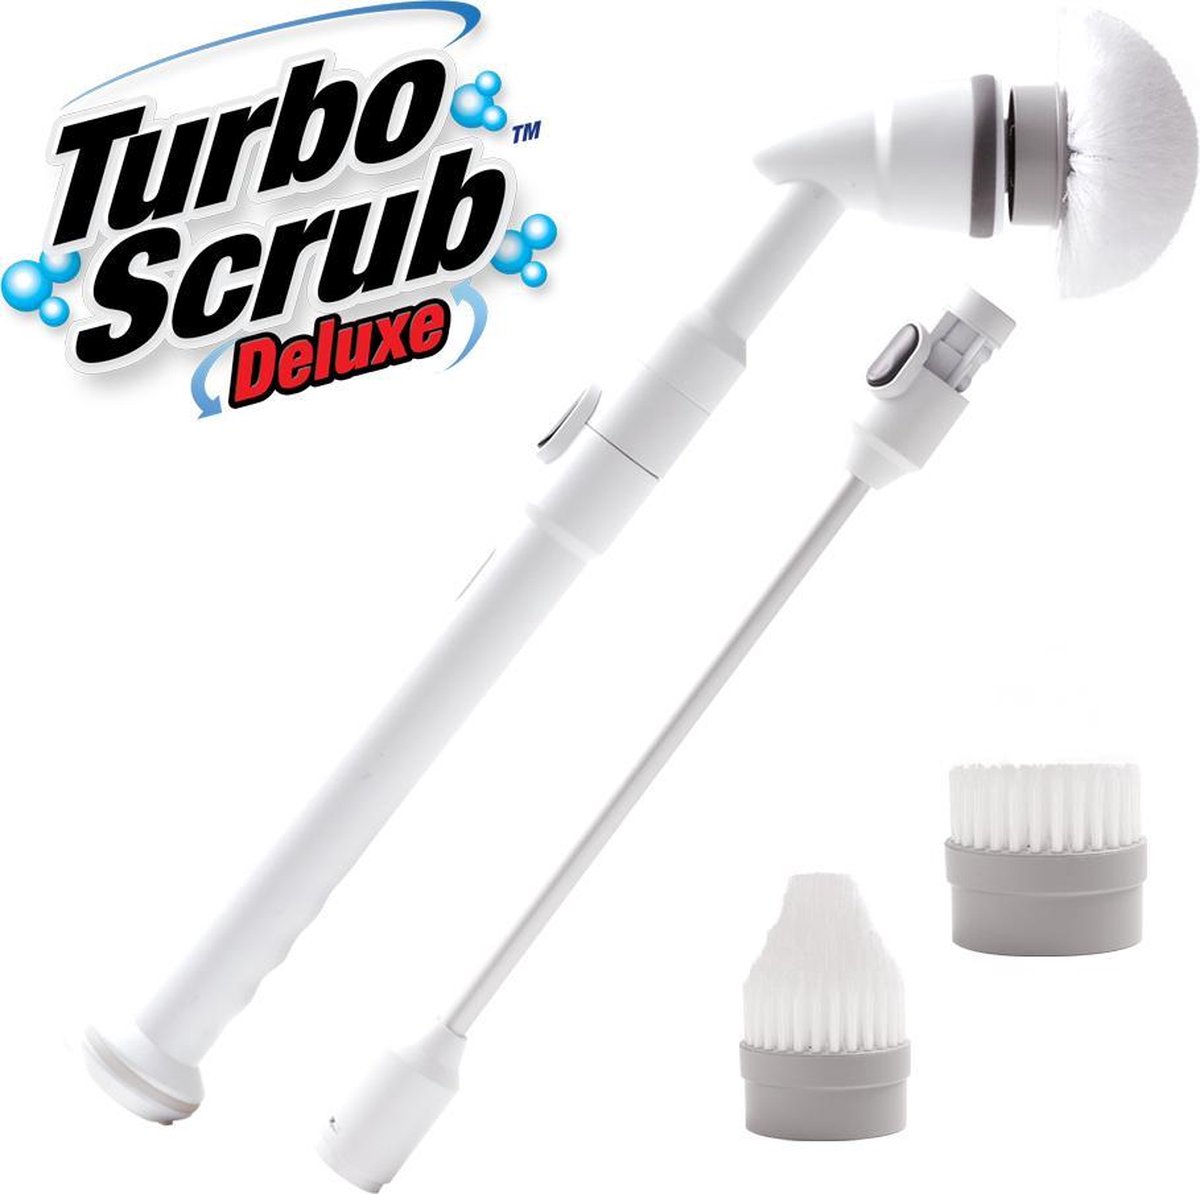 Turbo Scrub Pro